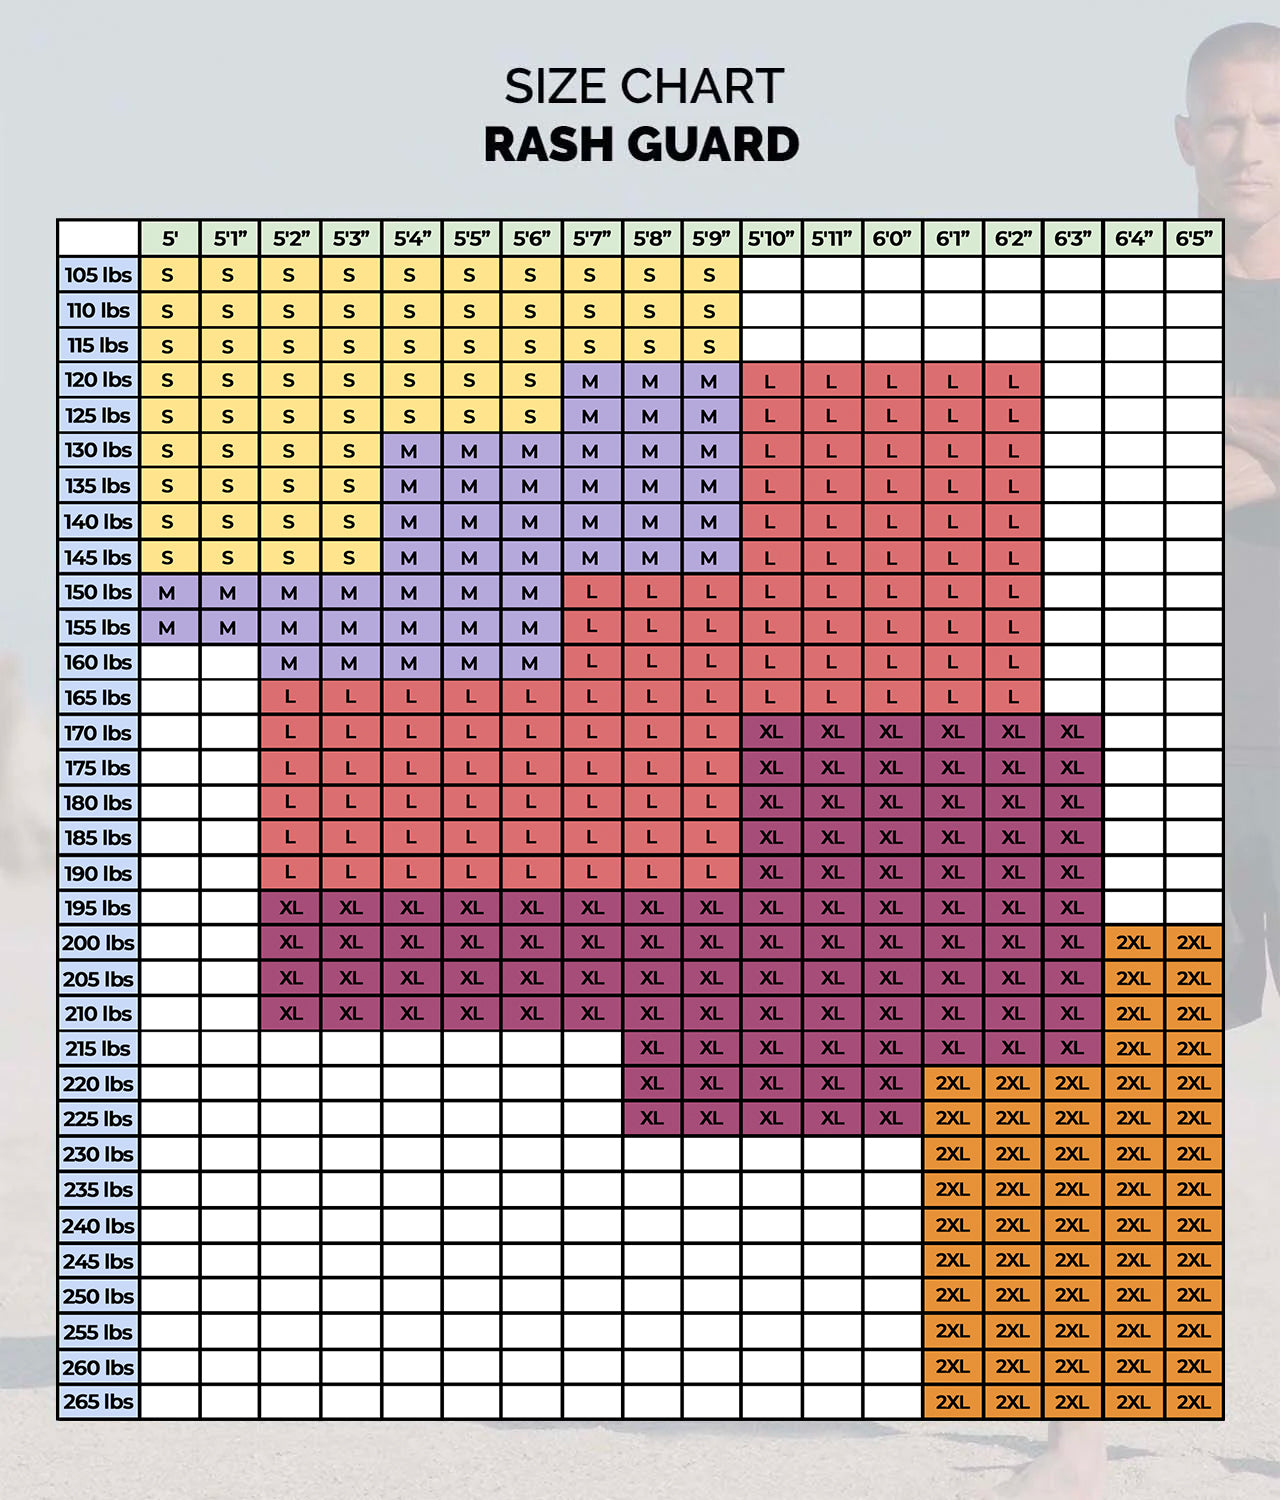 Men's Standard Purple Short Sleeve Training Rash Guard